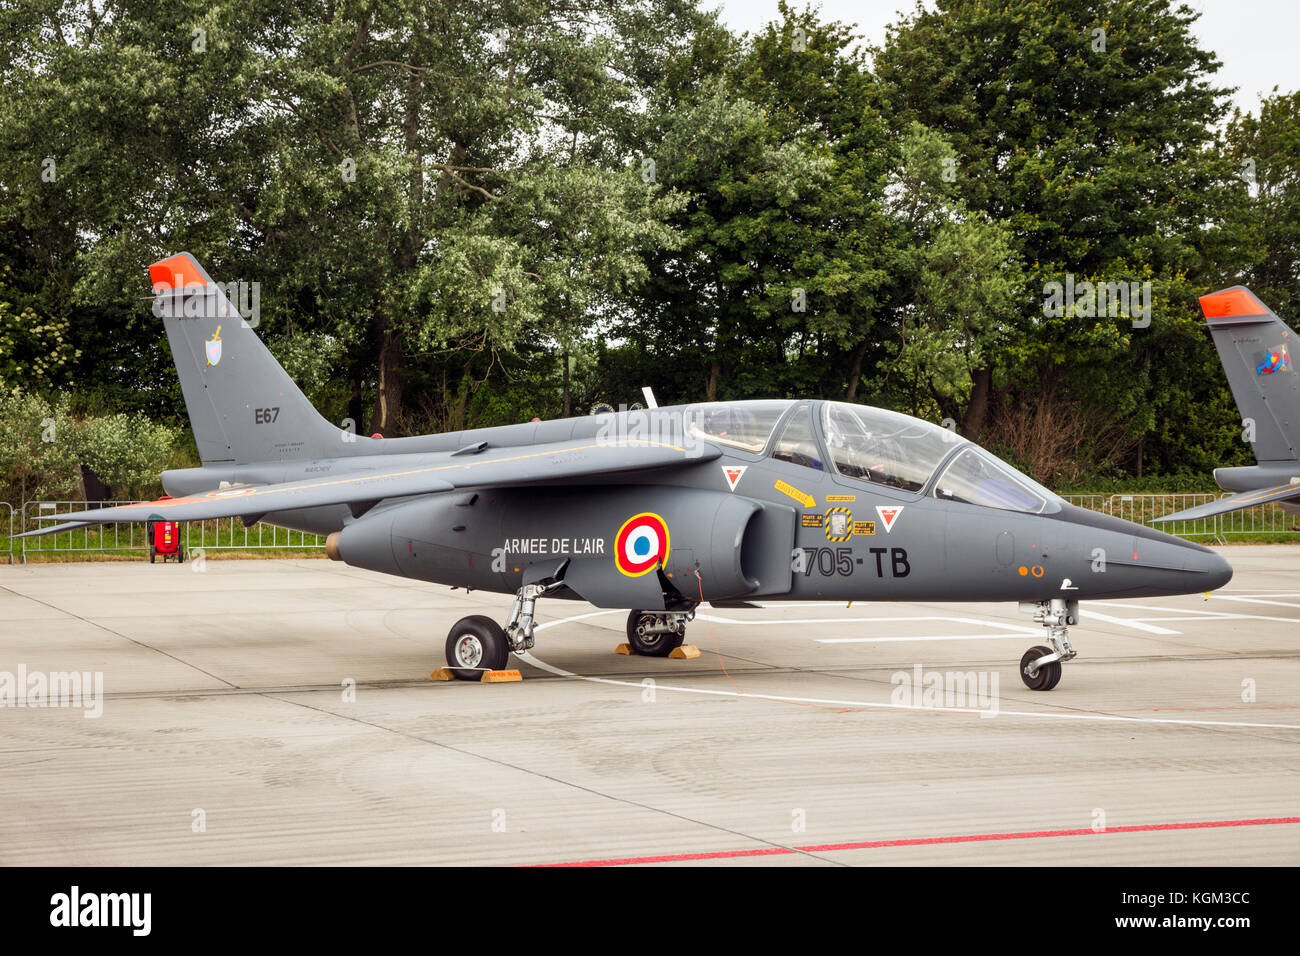 LEEUWARDEN, THE NETHERLANDS - JUN 10, 2016: French Air Force Dassault-Dornier Alpha Jet trainer plane on the tarmac of Leeuwarden airbase. Stock Photo